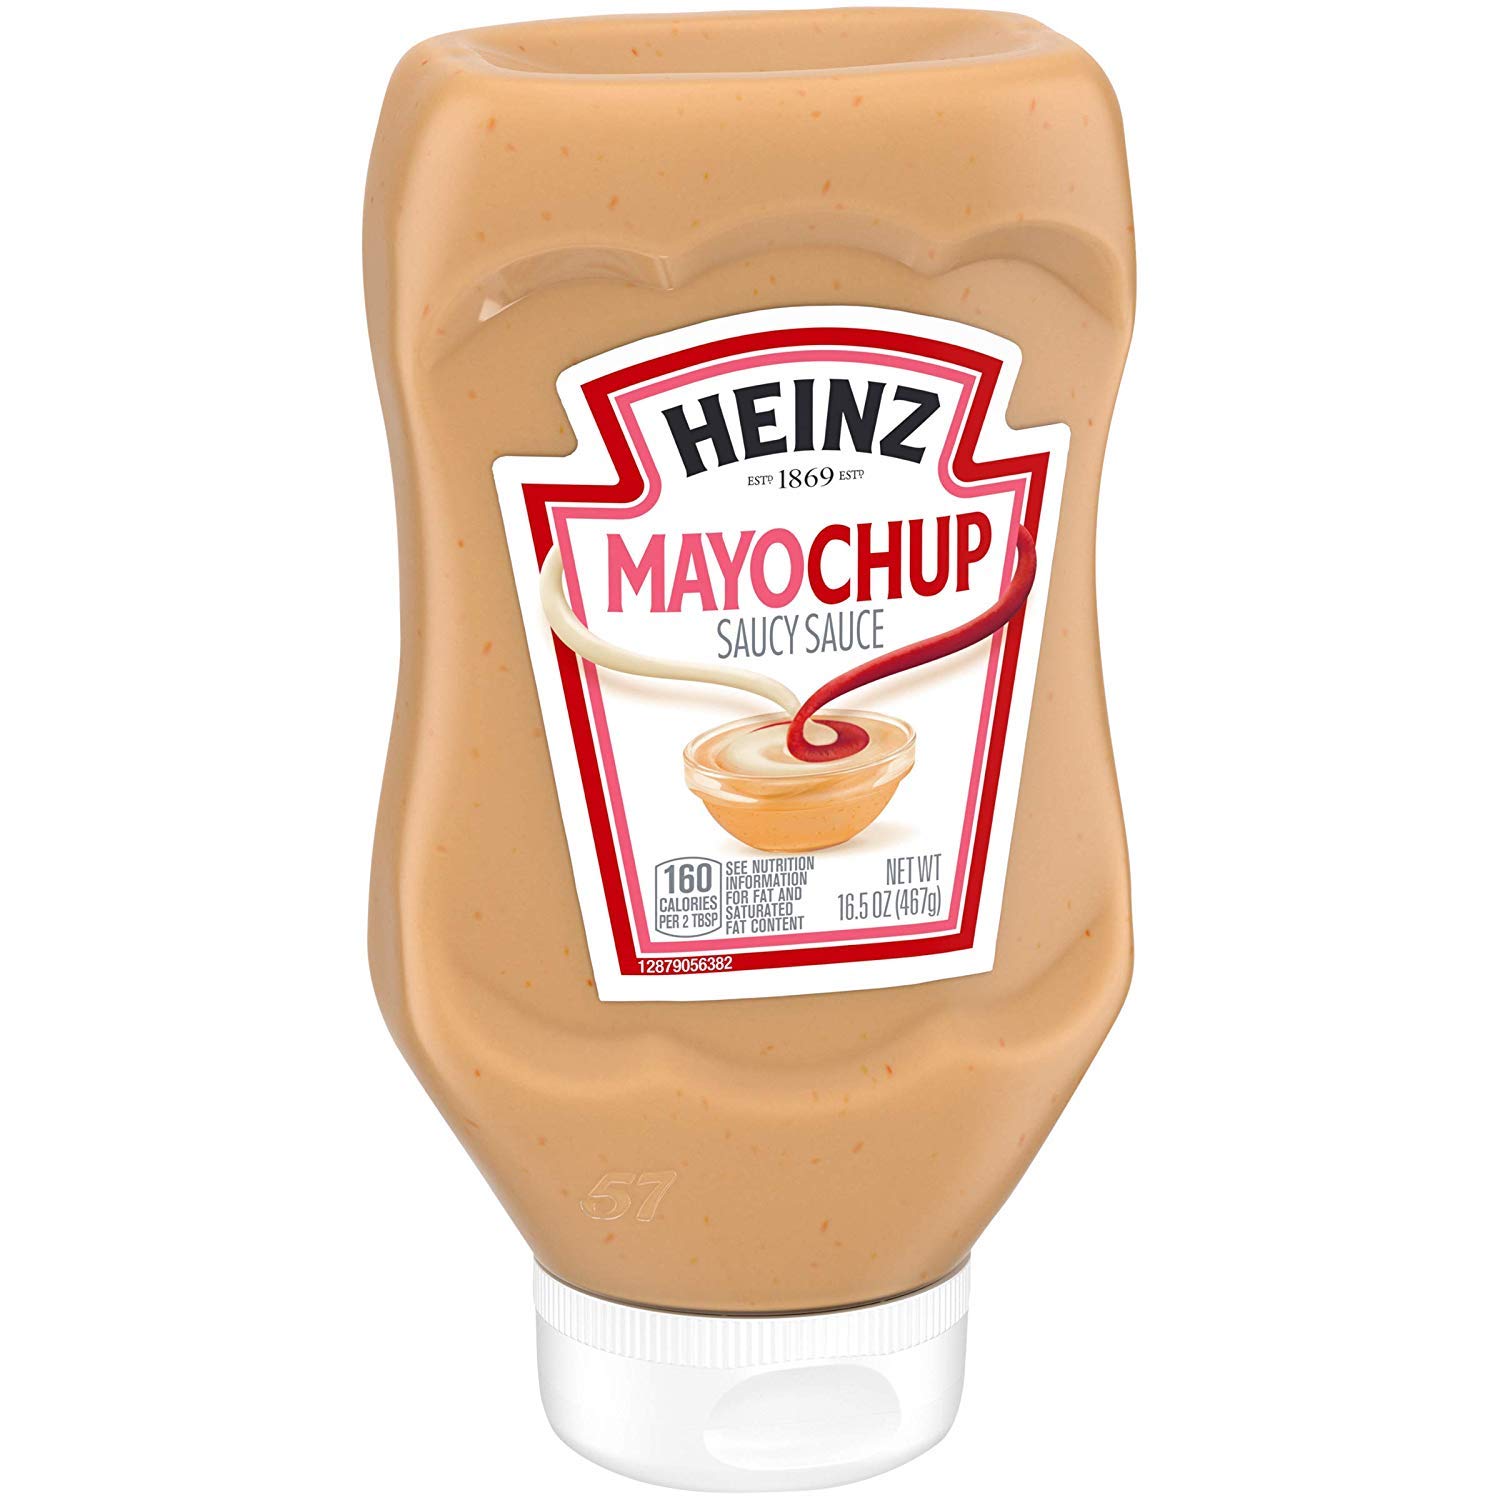 Heinz Mayochup Saucy Sauce 545g